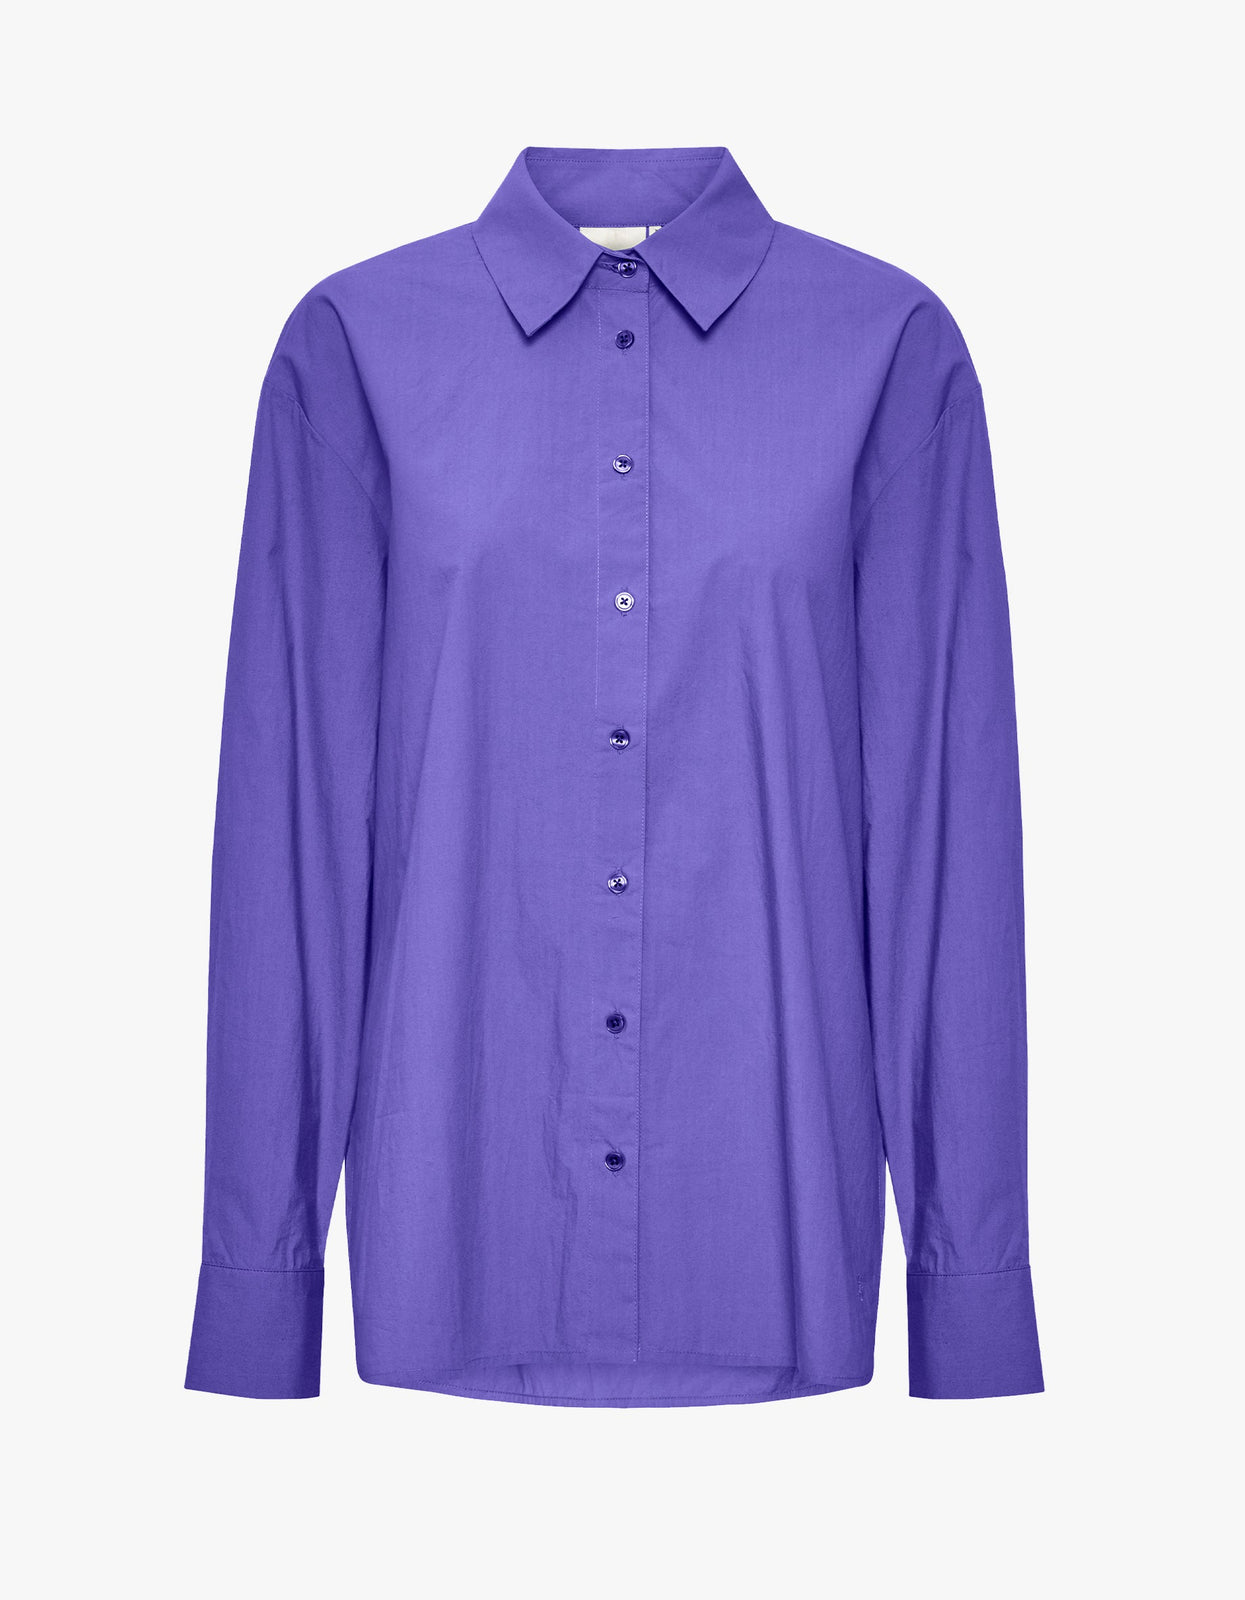 Warner's No Side Effects Convertible T-Shirt Bra, 38D, Purple Ash